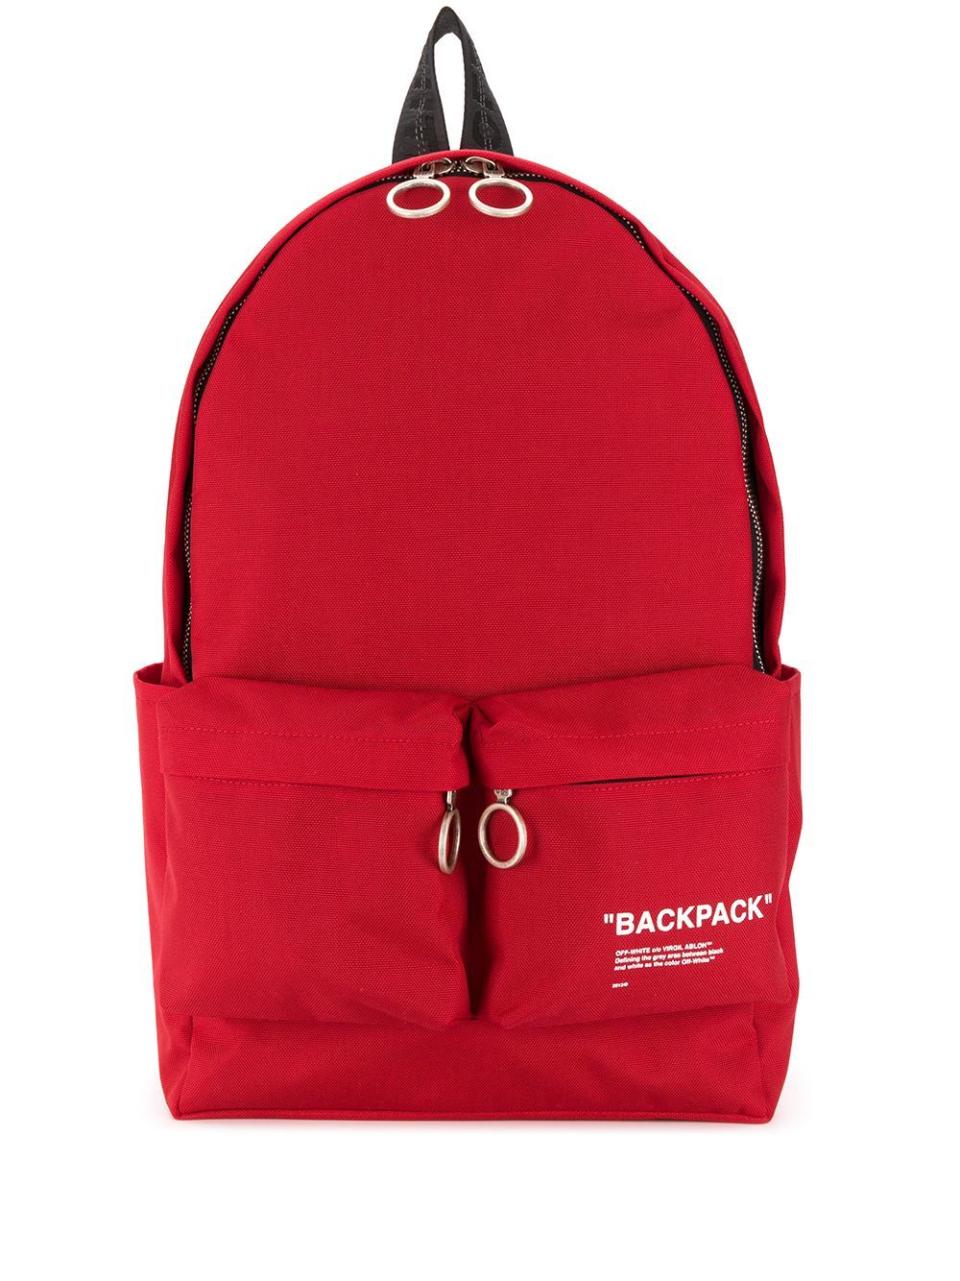 2) slogan backpack